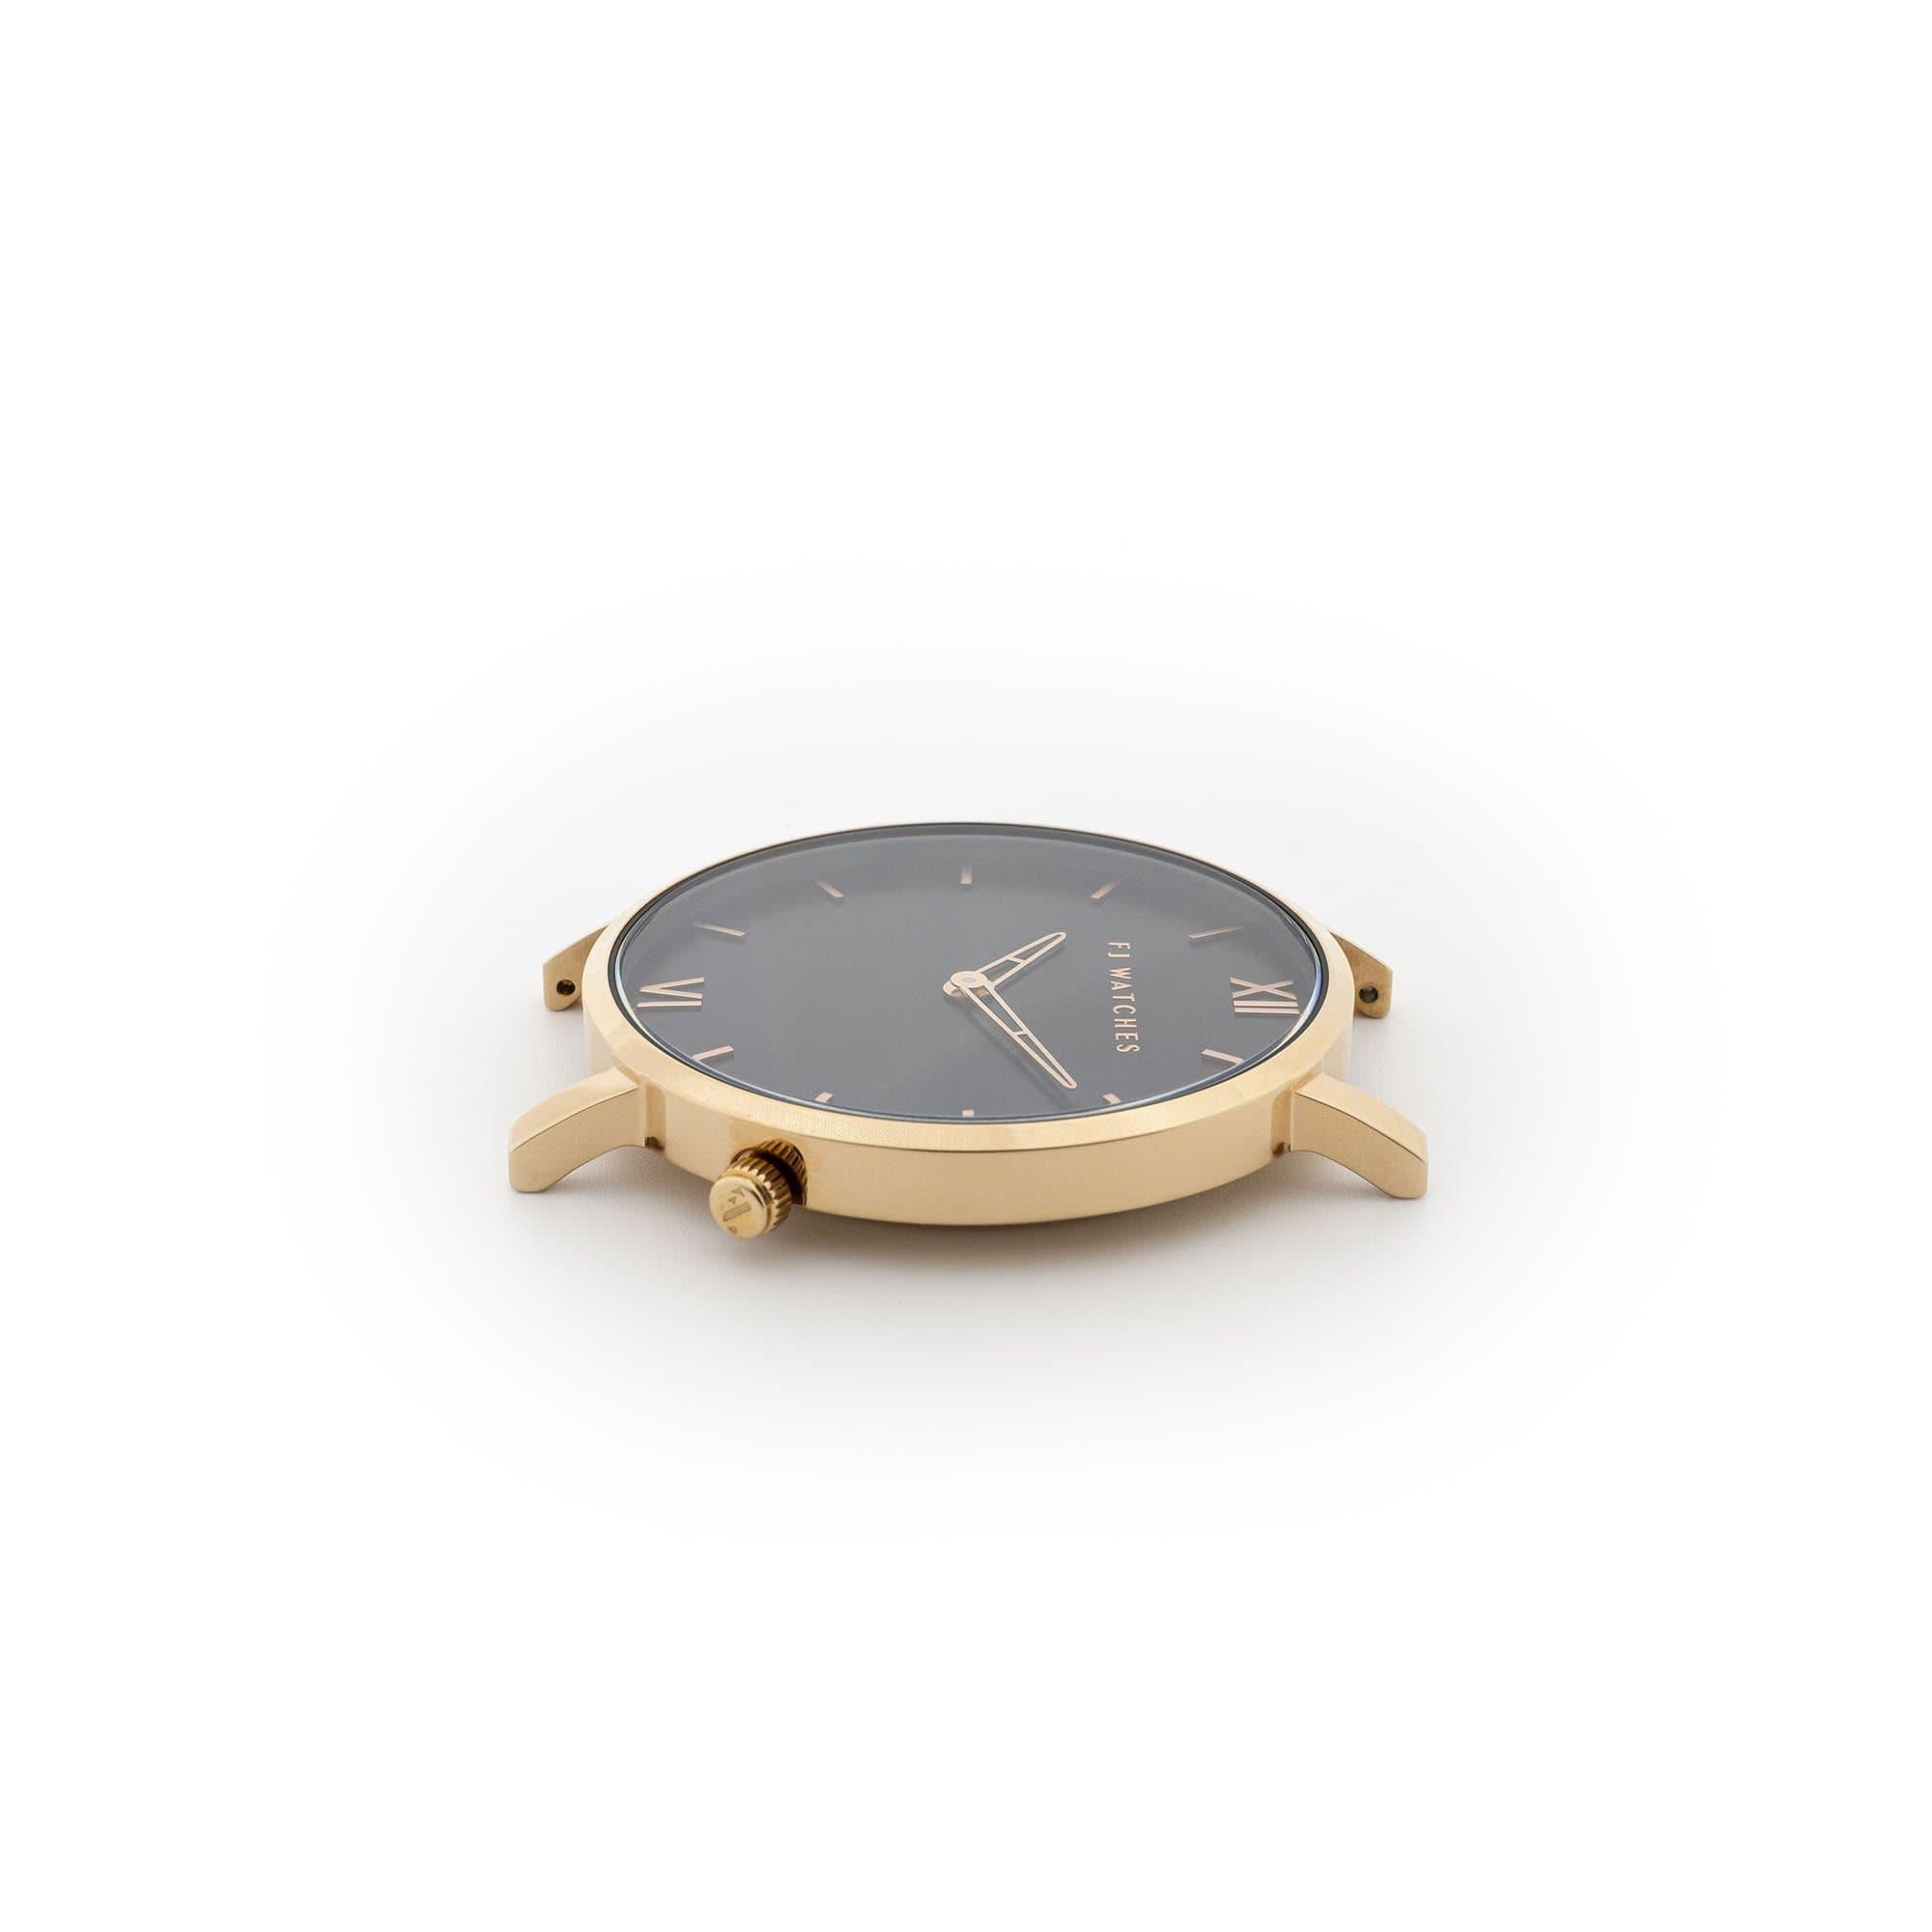 FJ Watches Golden moon black rose gold watch women 36mm minimalist dial